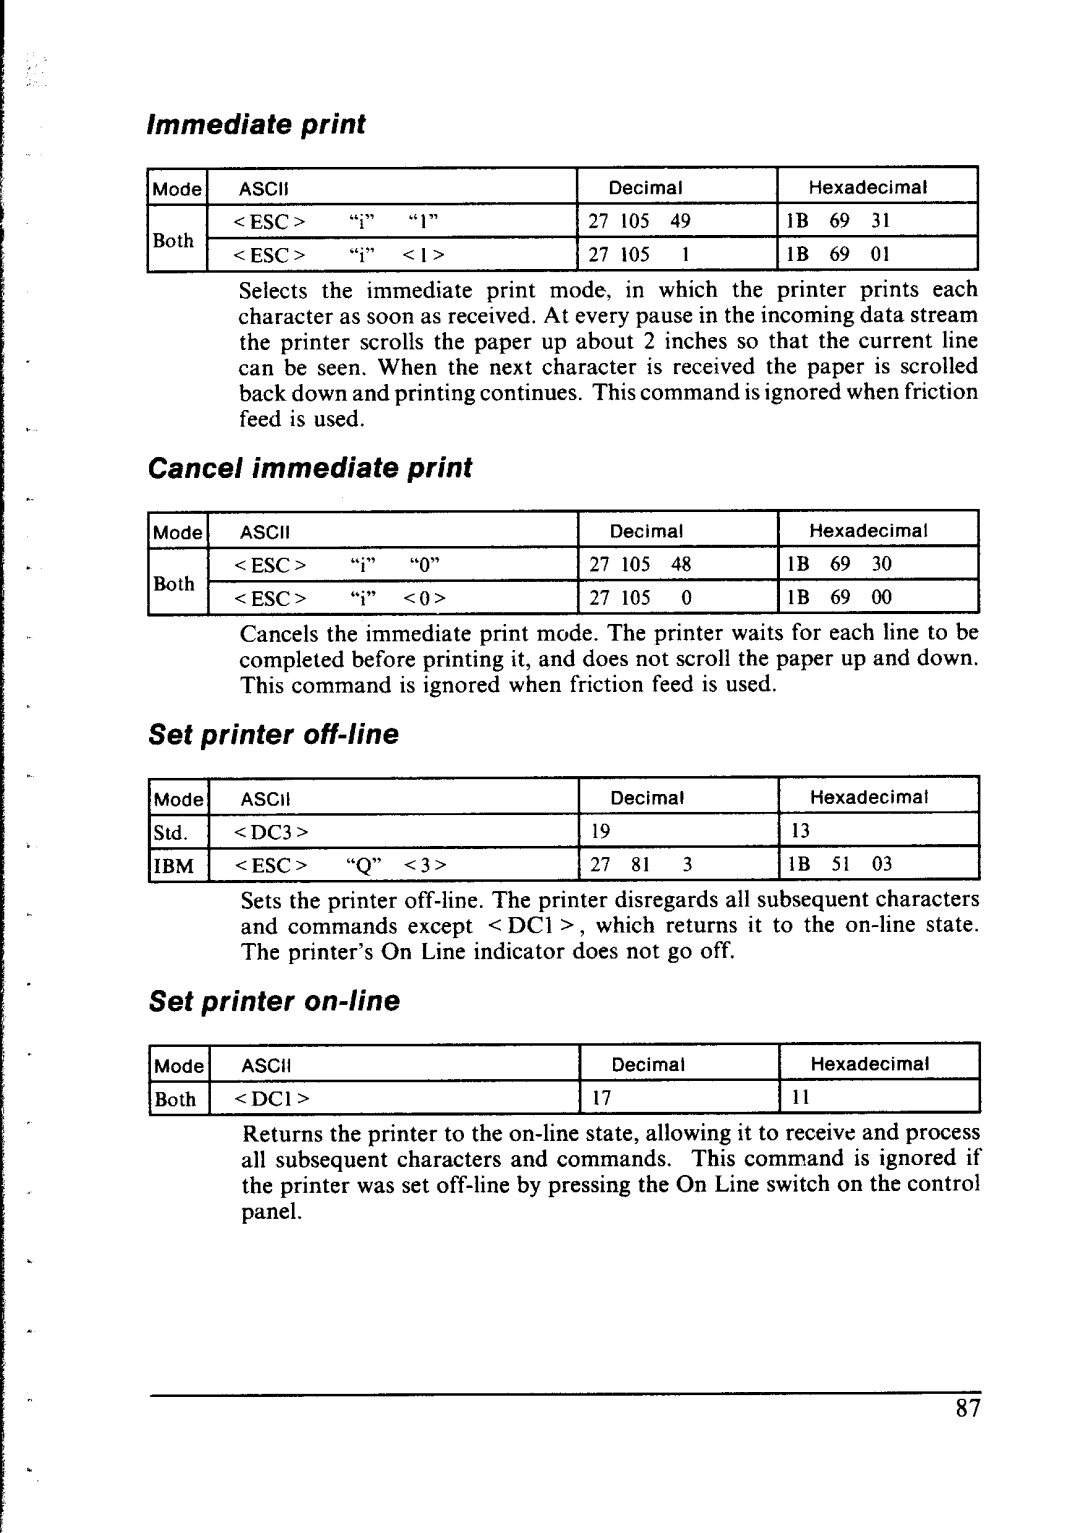 Star Micronics NX-1000 manual hrmediate print, Cancel immediate print, Set prinfer off-line, Set printer on-line, Both 